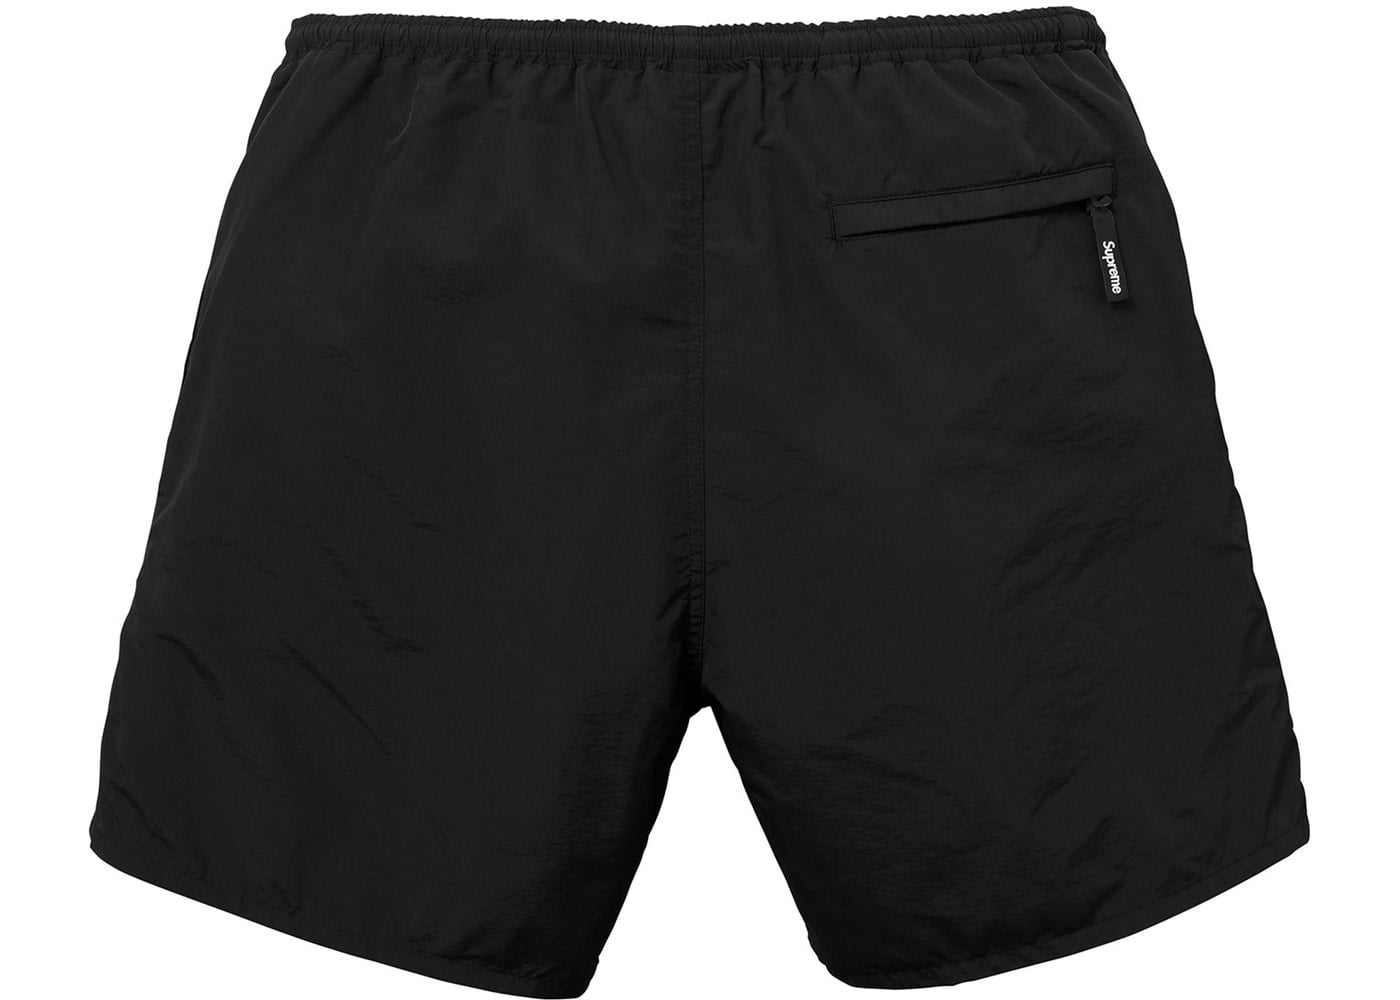 Supreme Black Shorts on Sale, 54% OFF | www.pegasusaerogroup.com